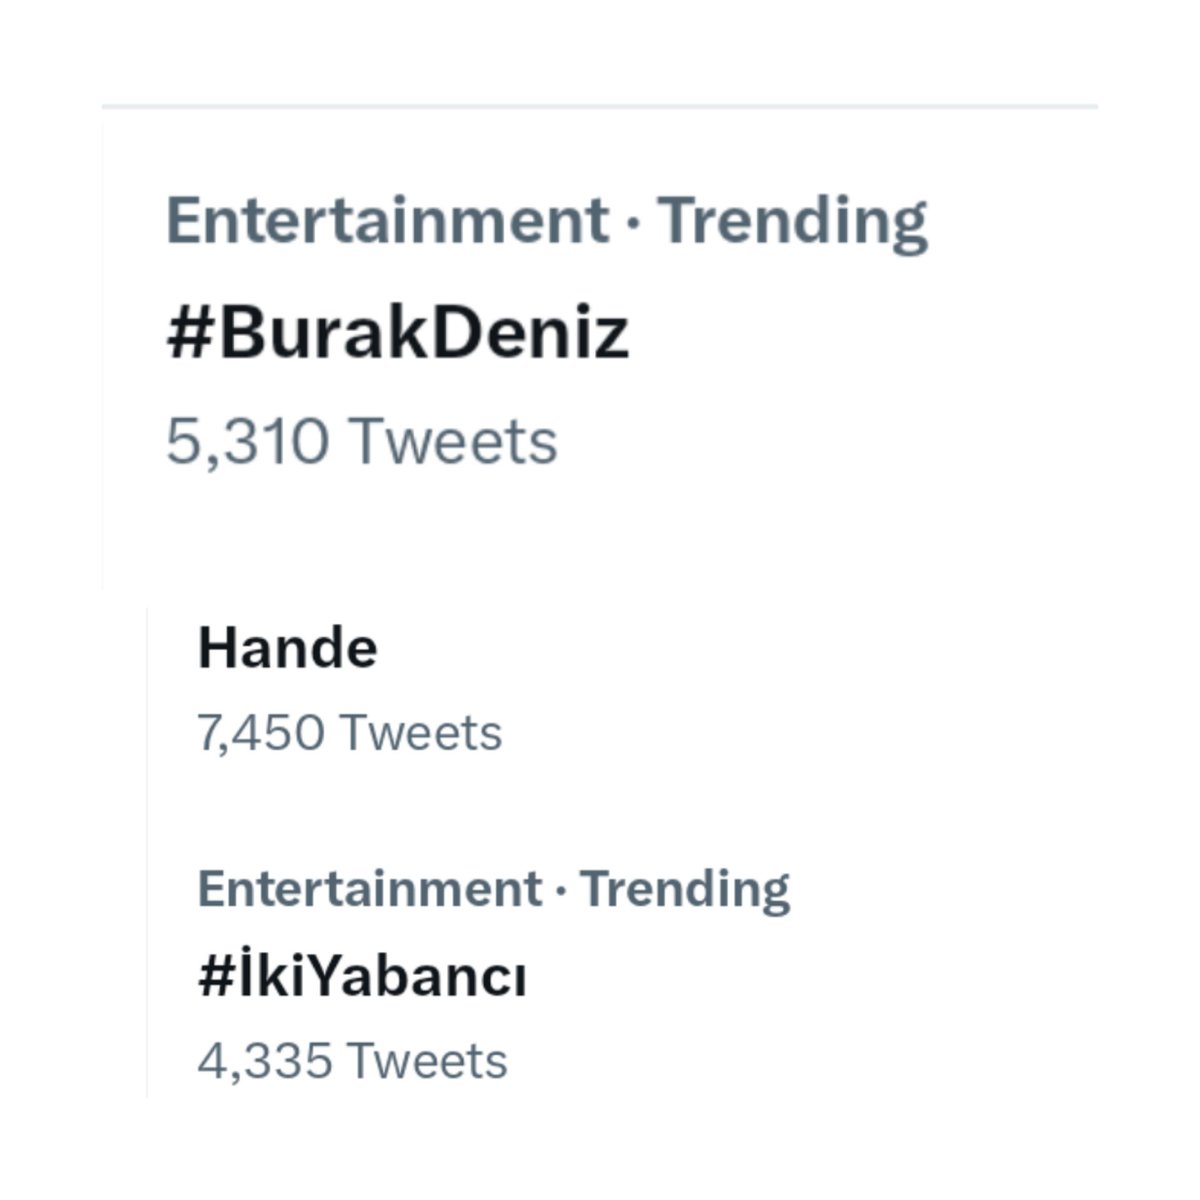 Burkito Handemiyy and ikiyabanci are trending ❤️
#BurakDeniz #HandeErçel #IkiYabanci